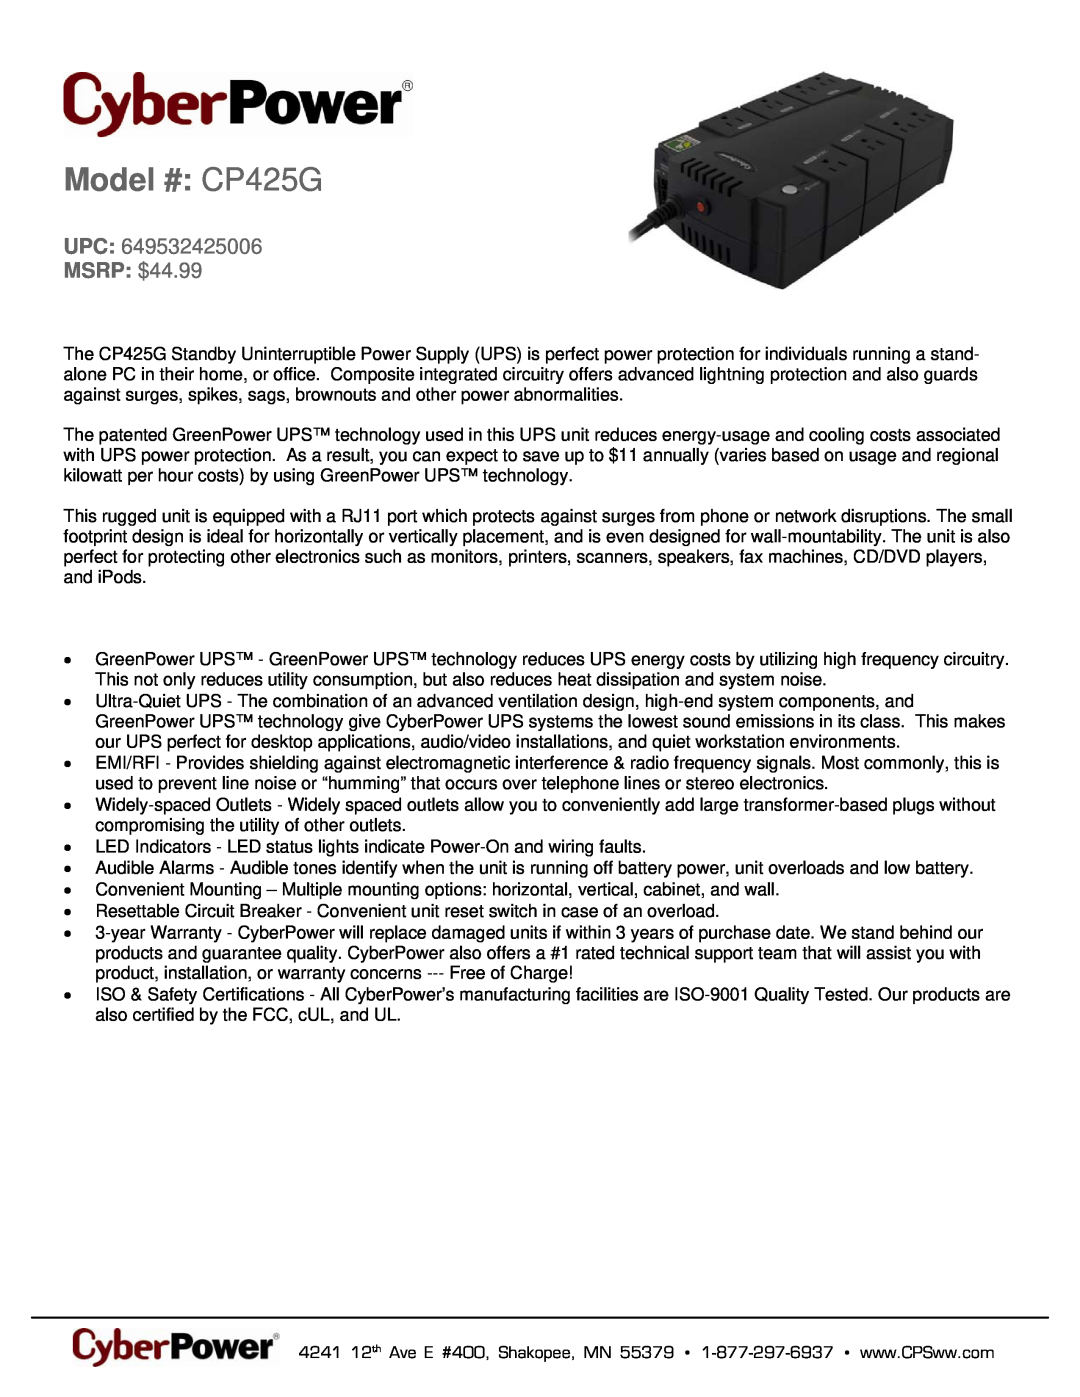 CyberPower Systems 649532425006 warranty Model # CP425G, MSRP $44.99 